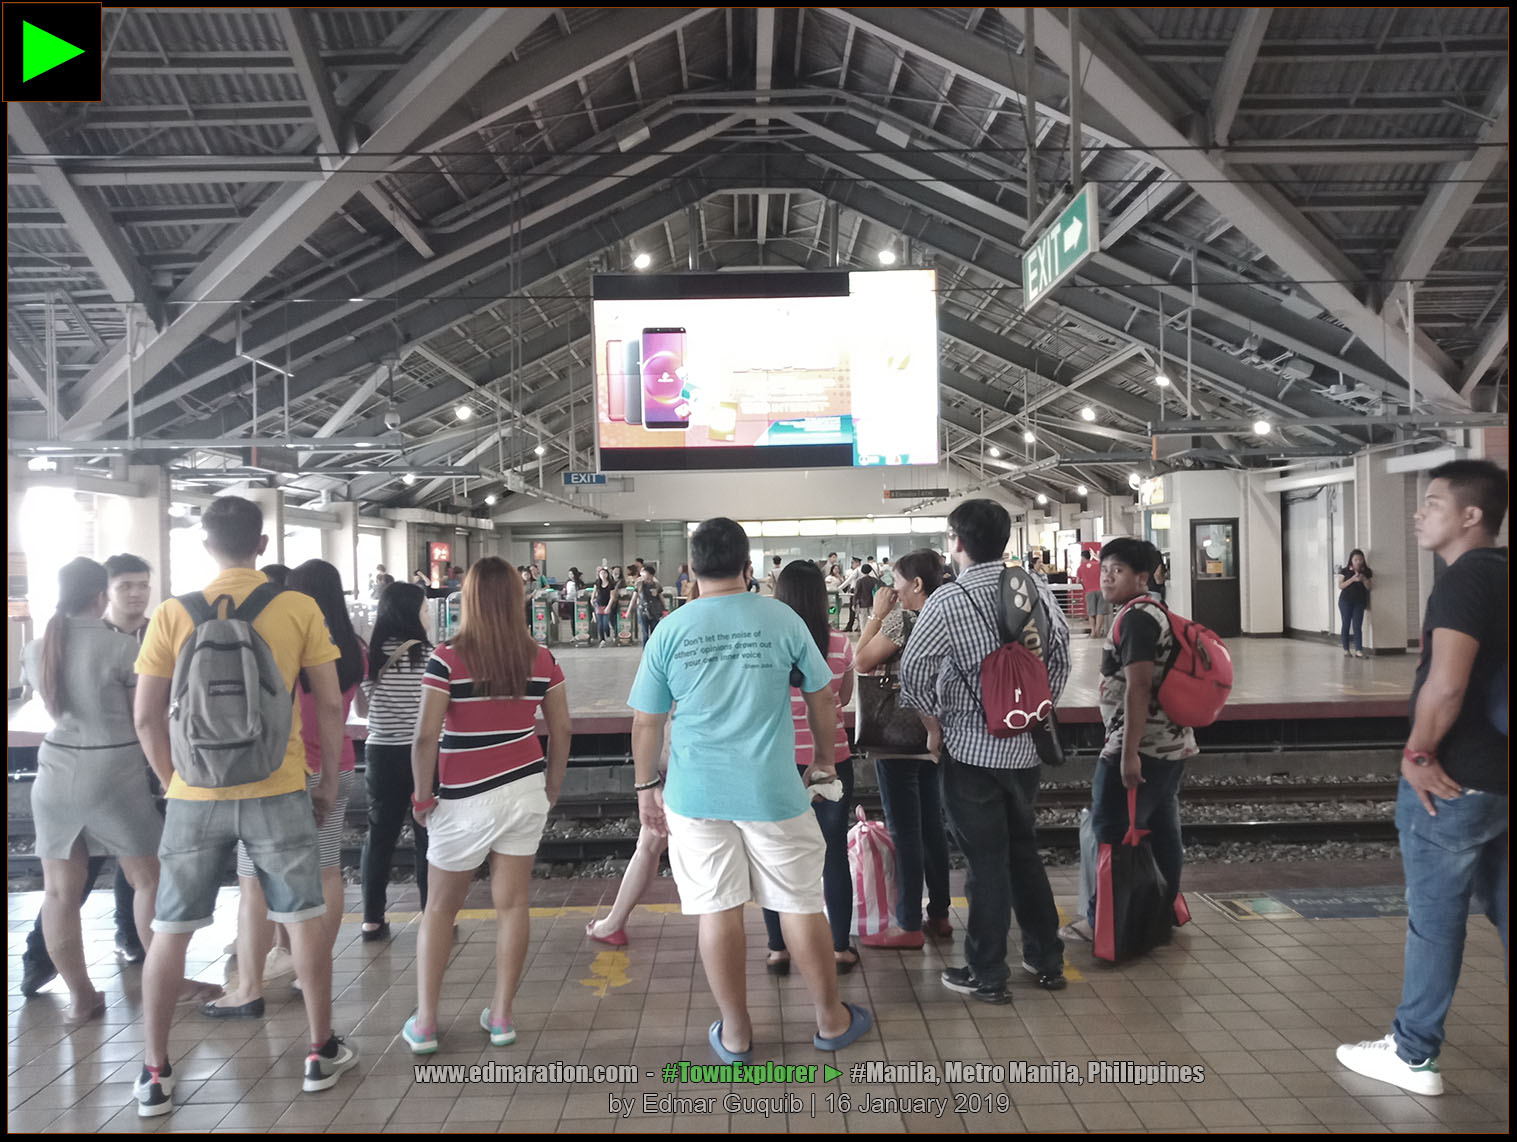 DOROTEO JOSE LRT STATION, MANILA